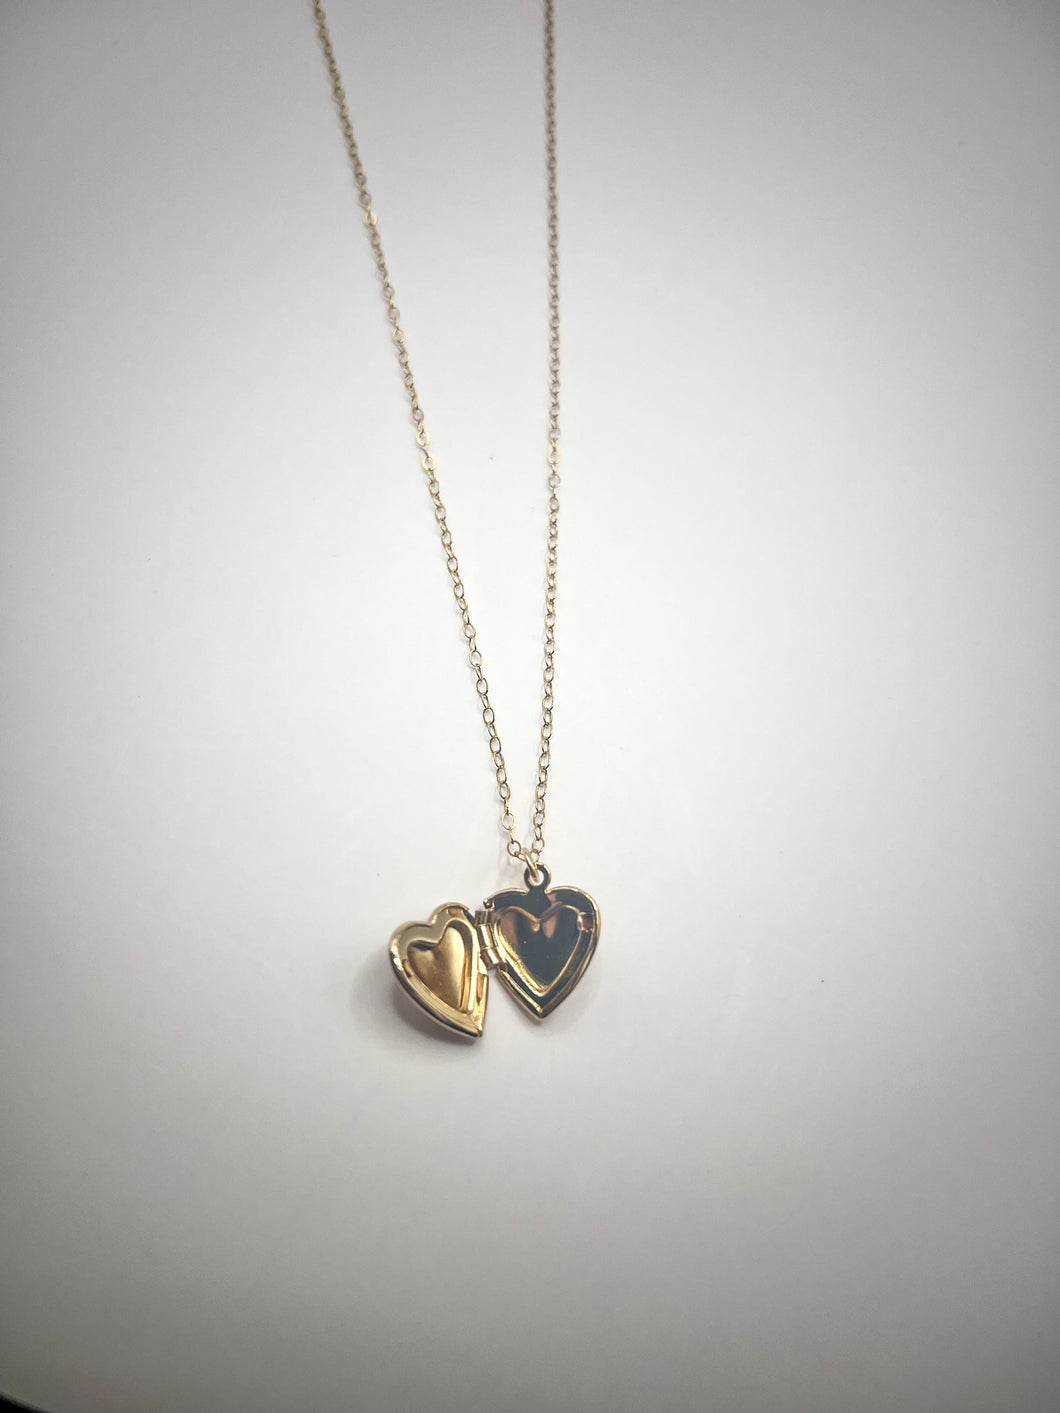 Heart Locket Necklace - Gold Filled